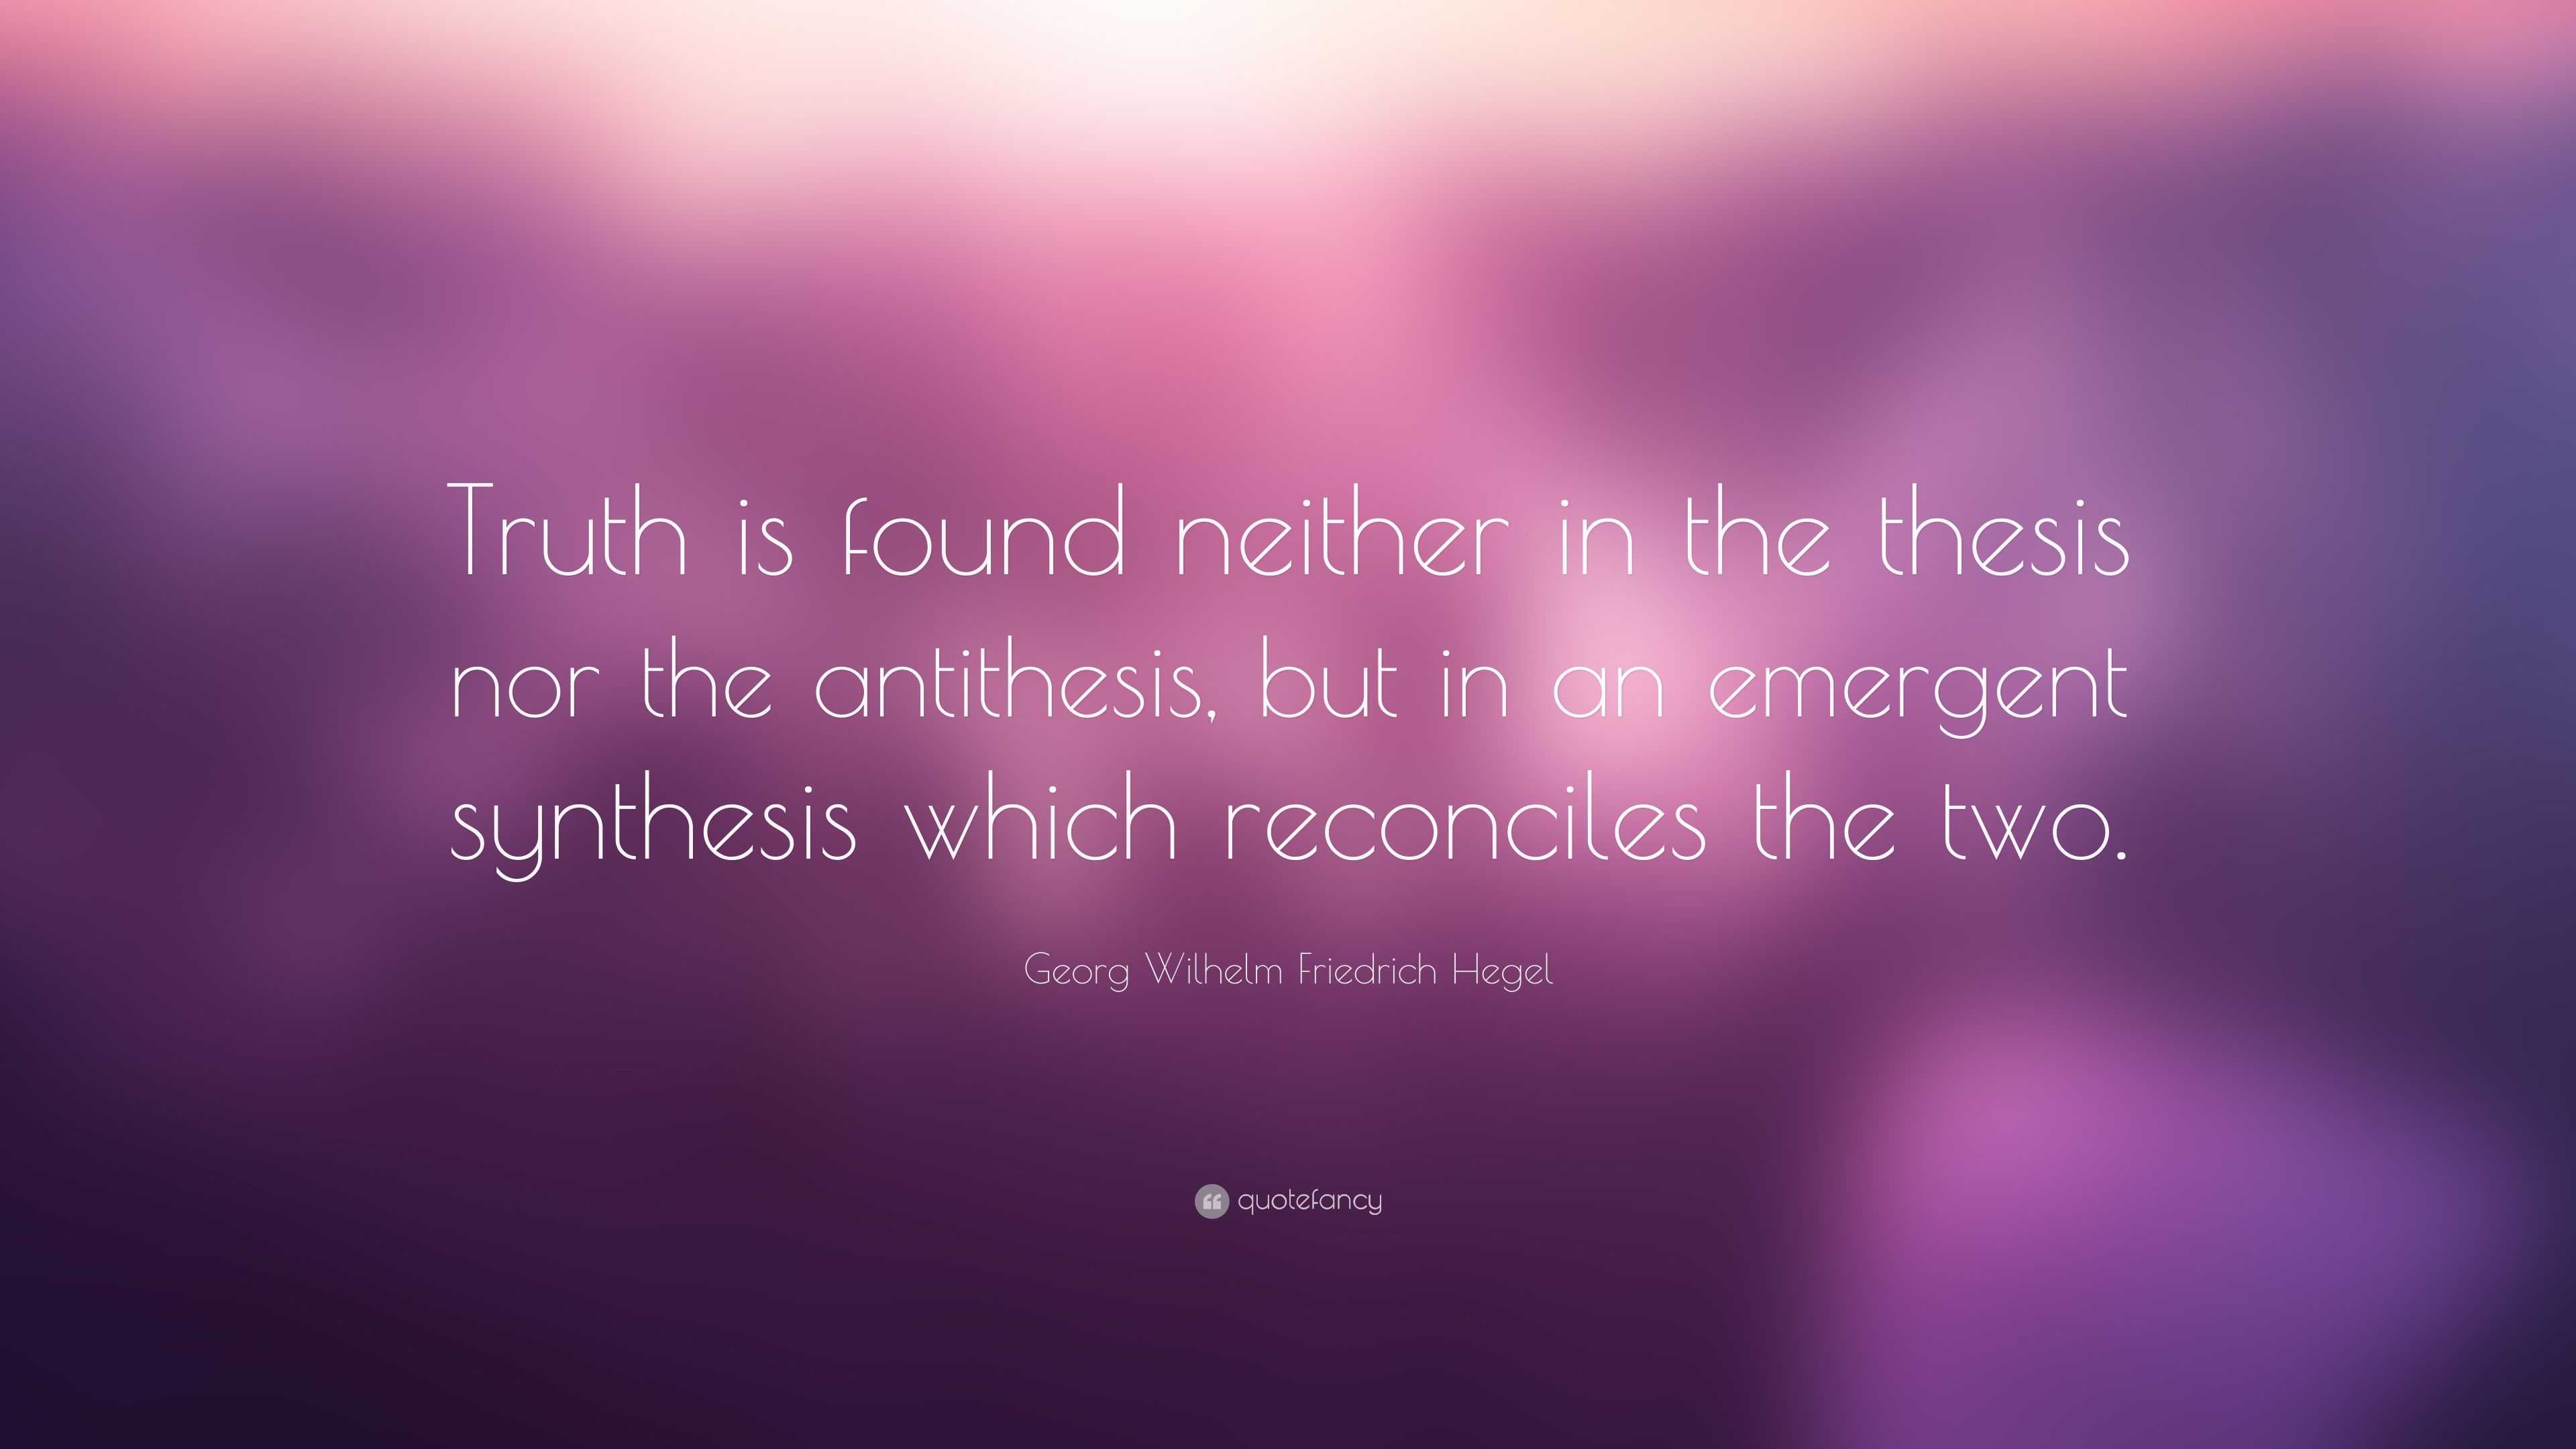 Georg Wilhelm Friedrich Hegel Quote: “Truth is found neither in the ...